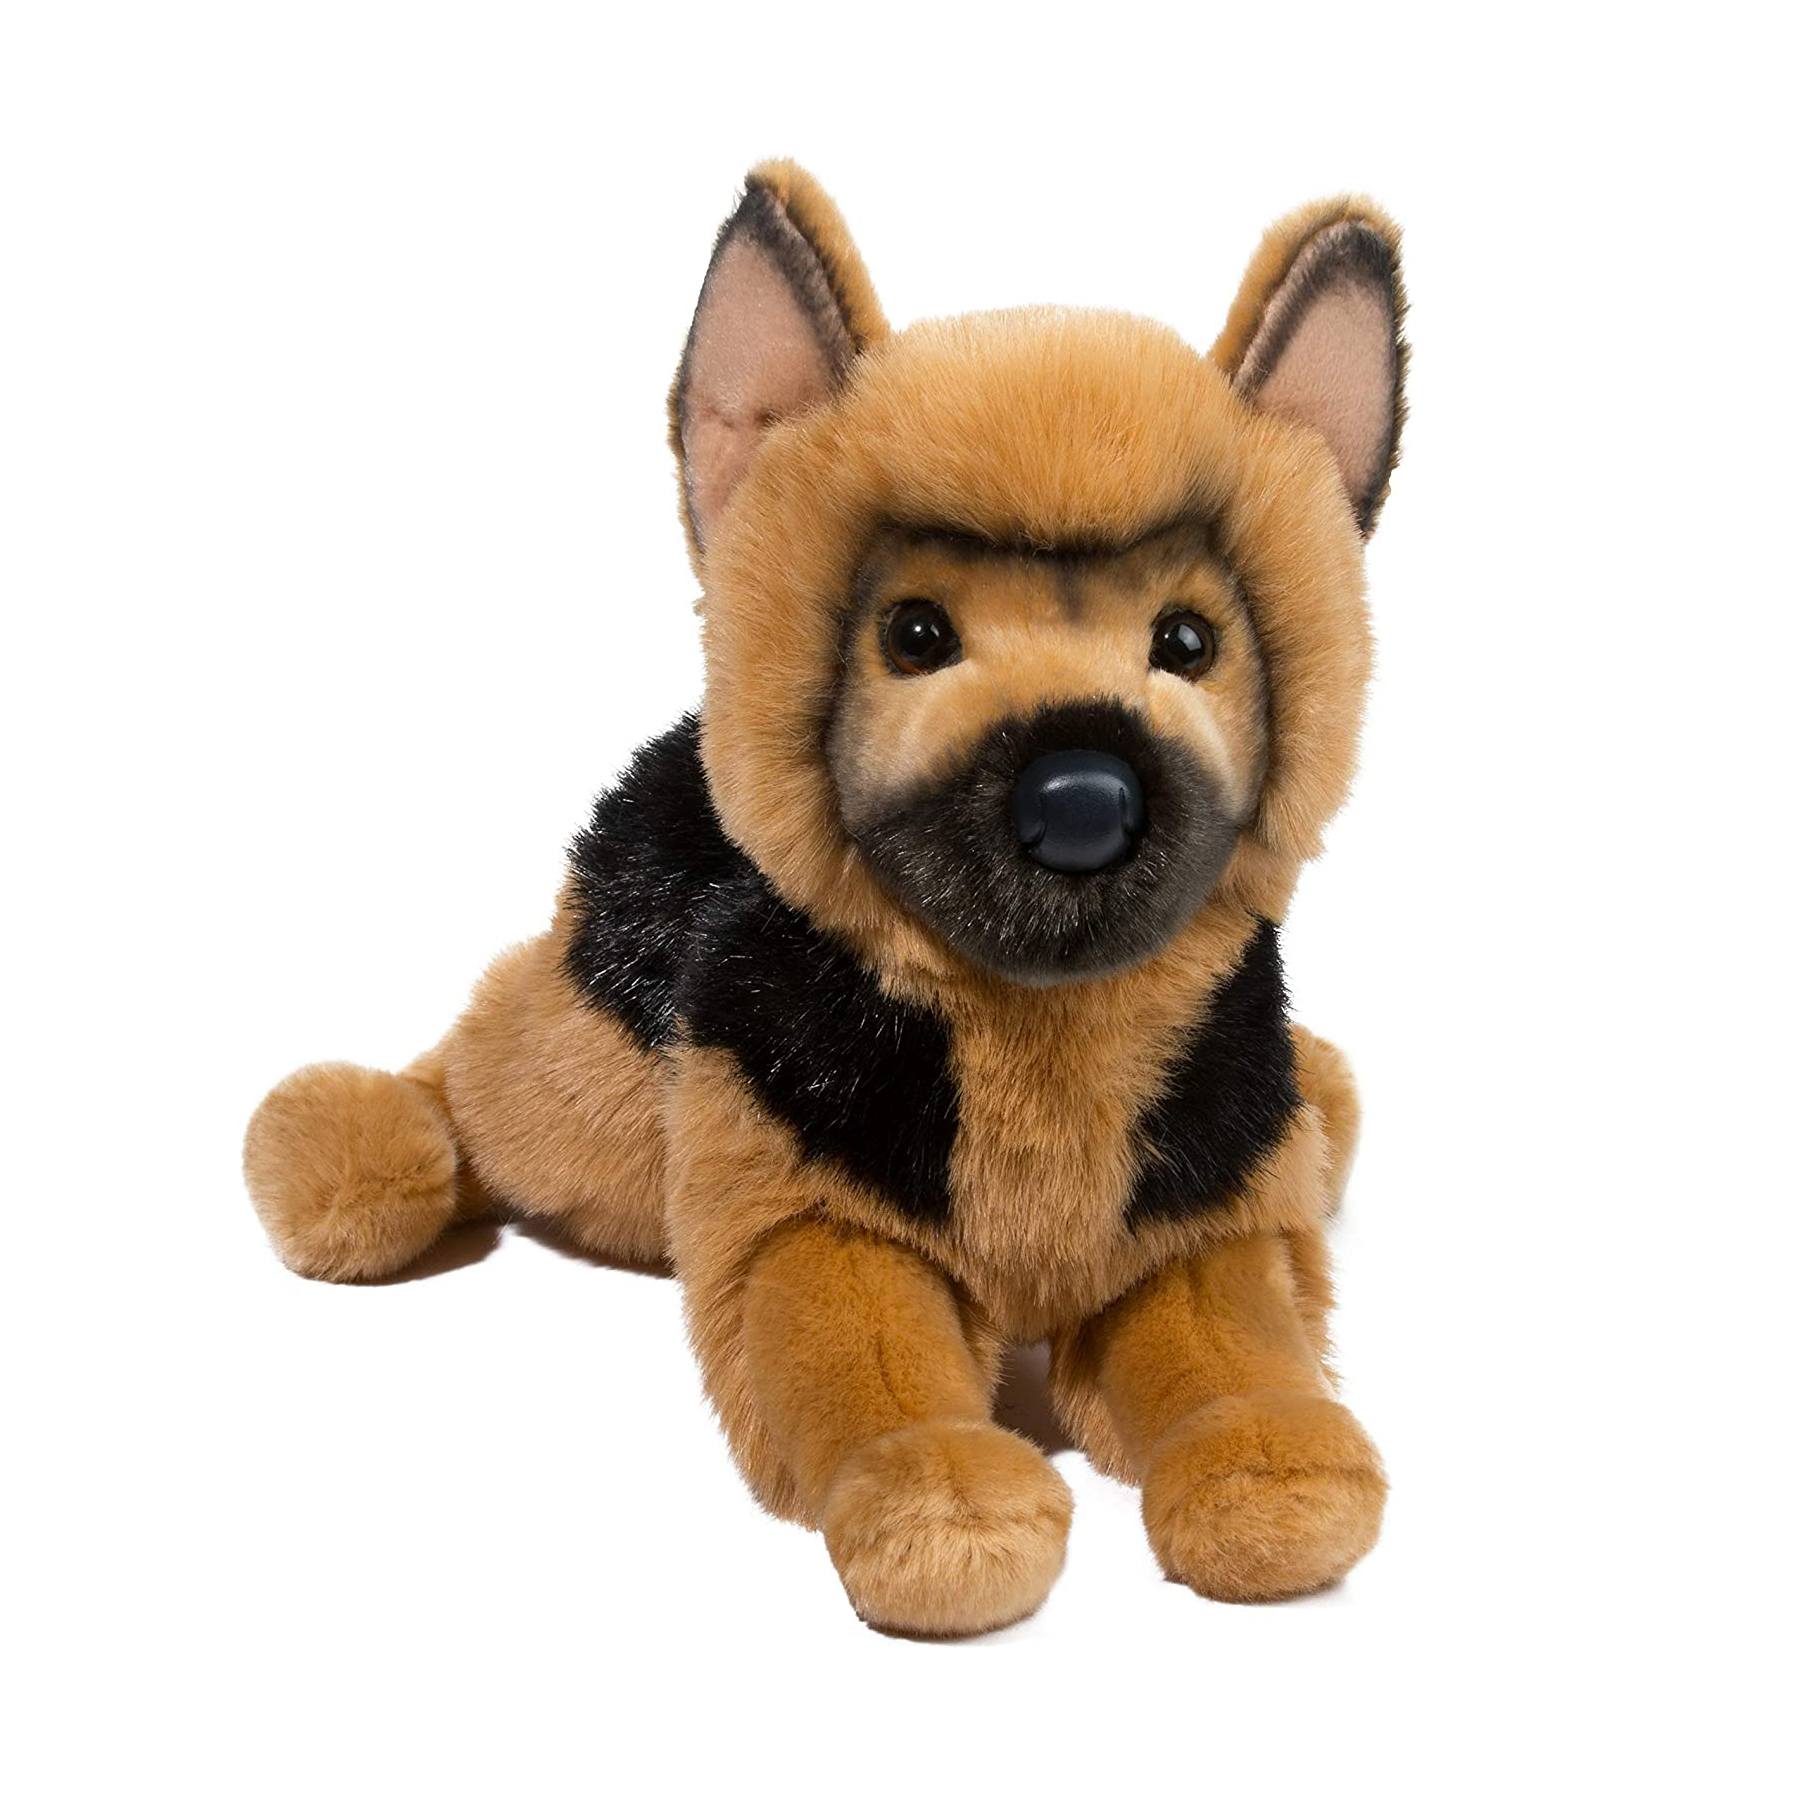 GENERAL GERMAN SHEPHERD Douglas Cuddle 14" stuffed plush animal toy dog puppy 